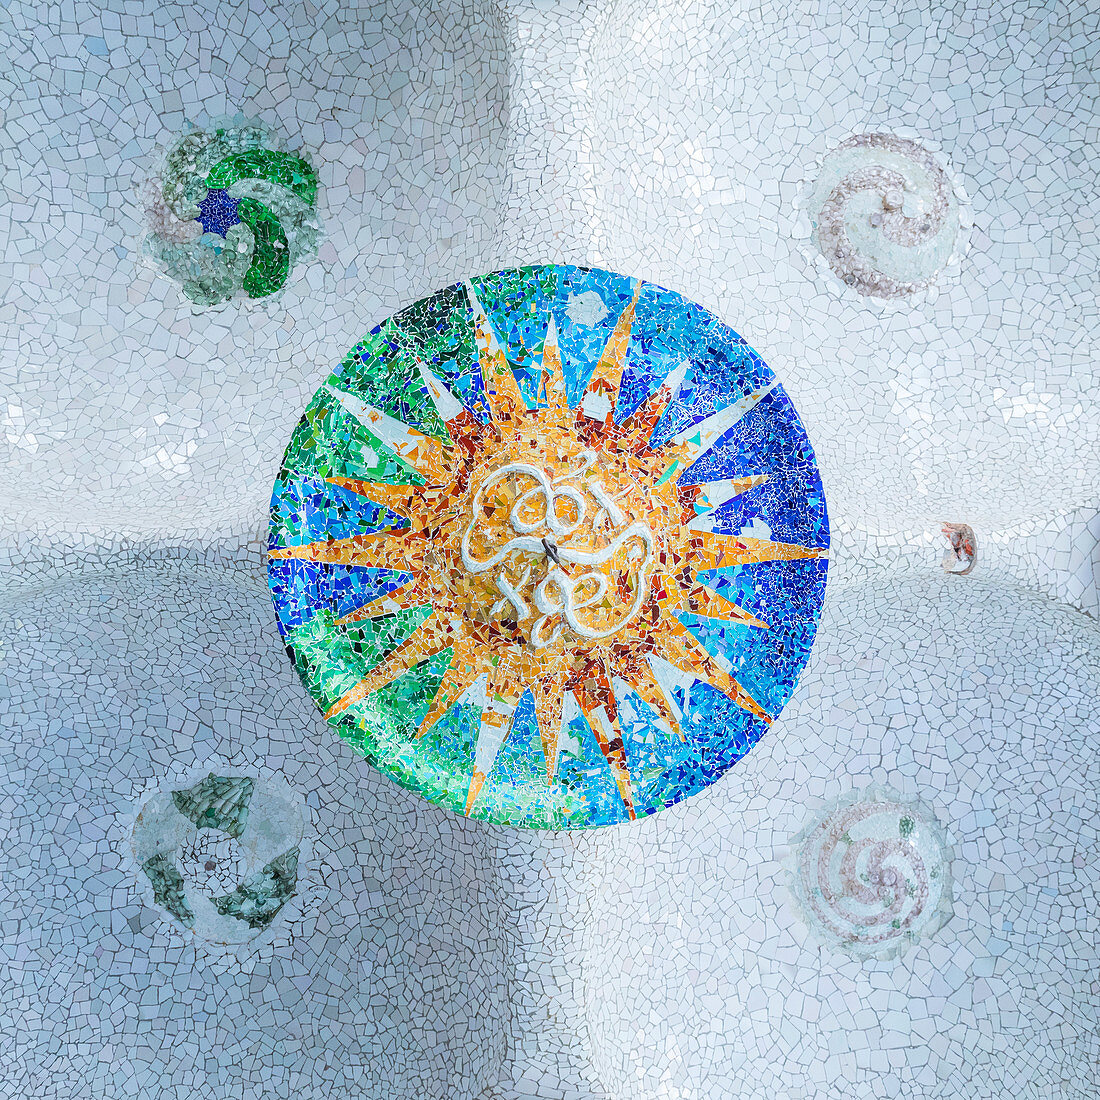 Mosaik an der Decke der Sala Hipostila im Park Guell, Barcelona\n